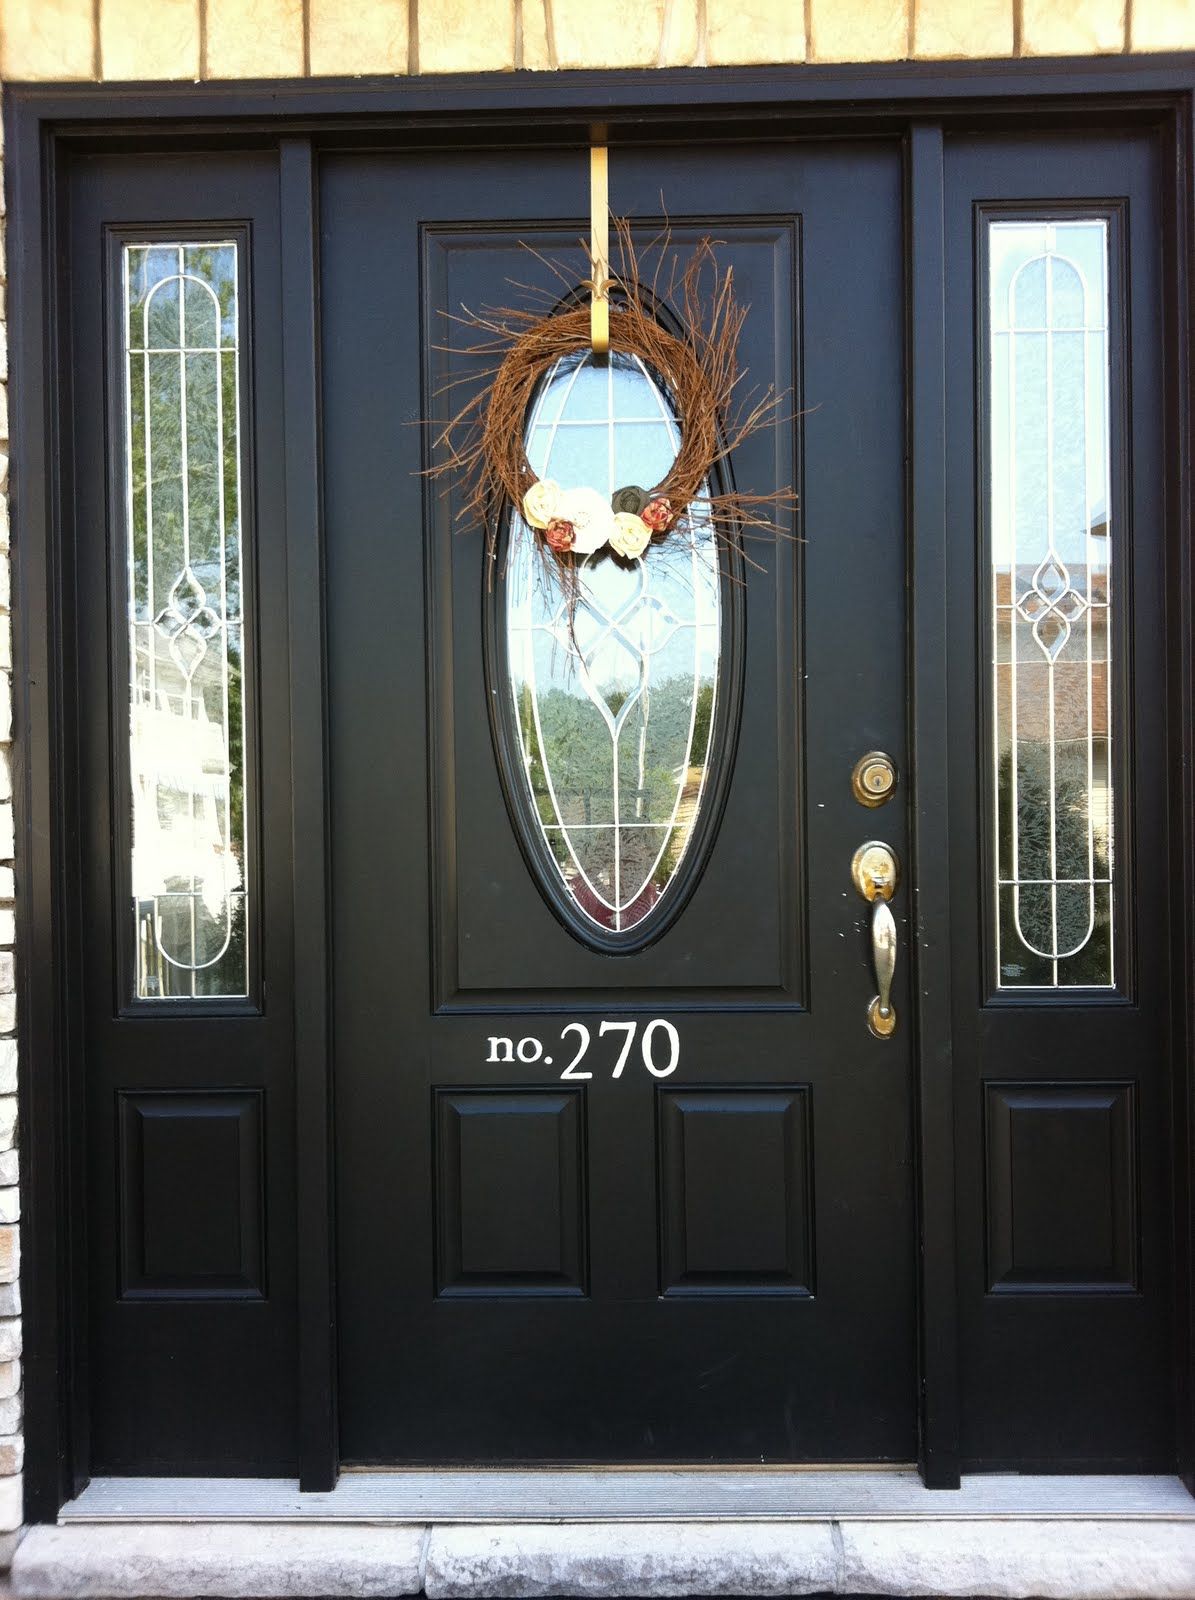 Painted Number on Front Door